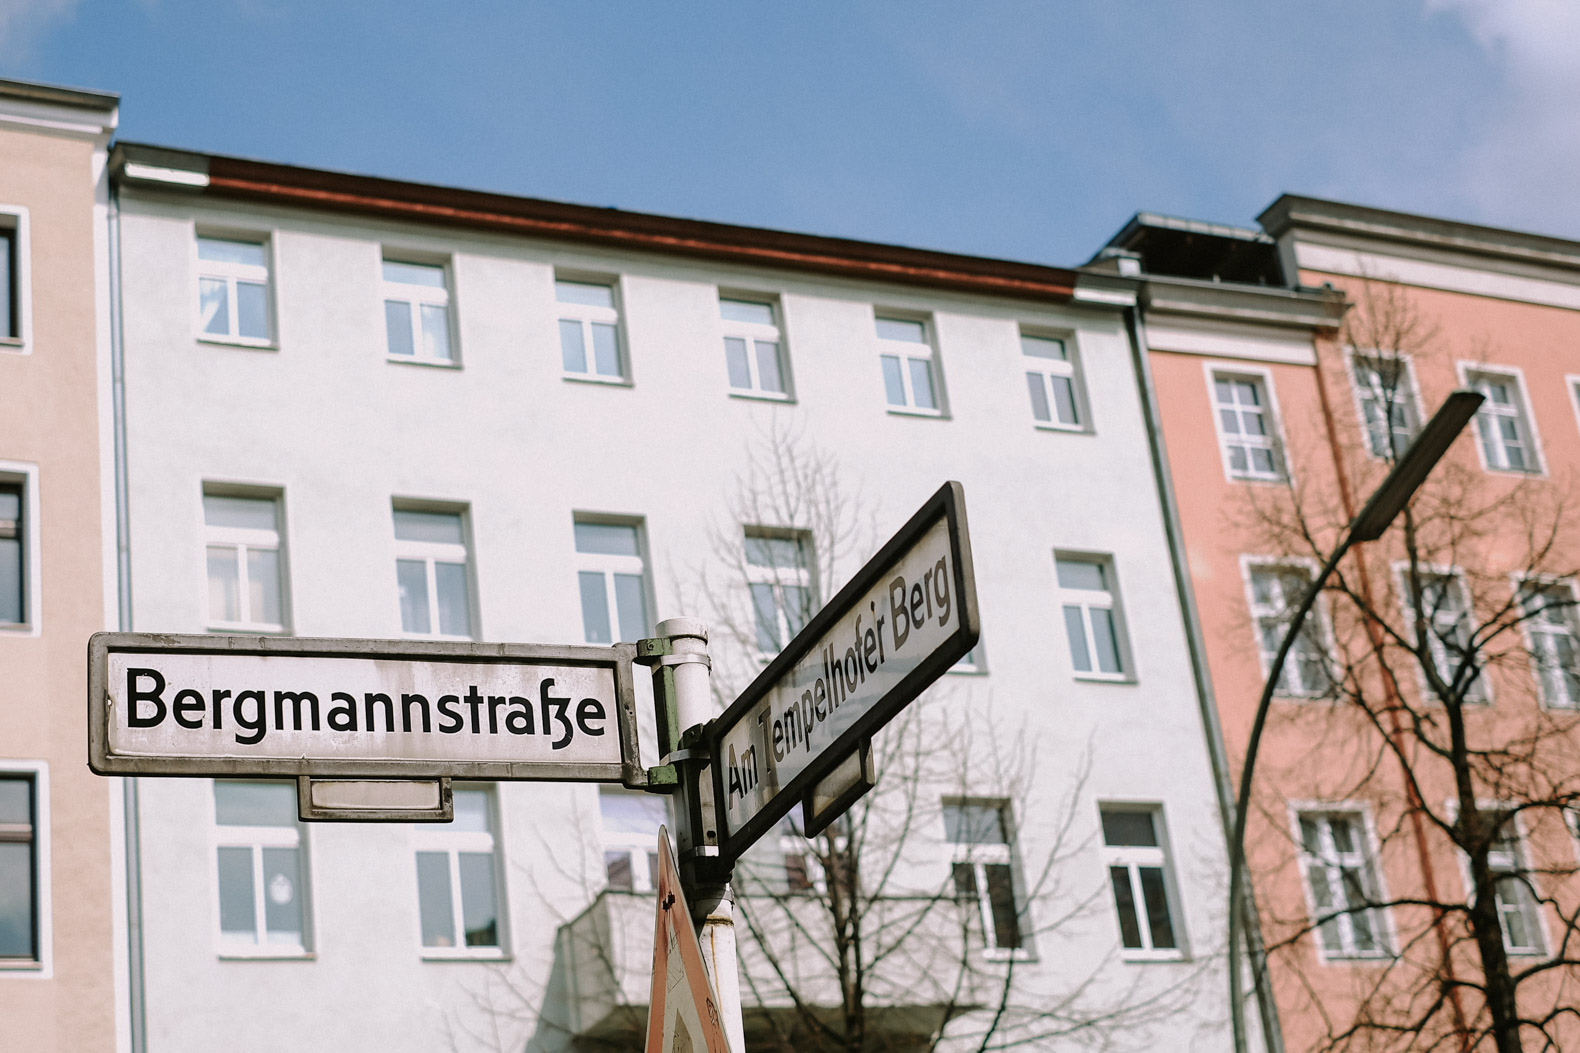 Street sign in Berlin